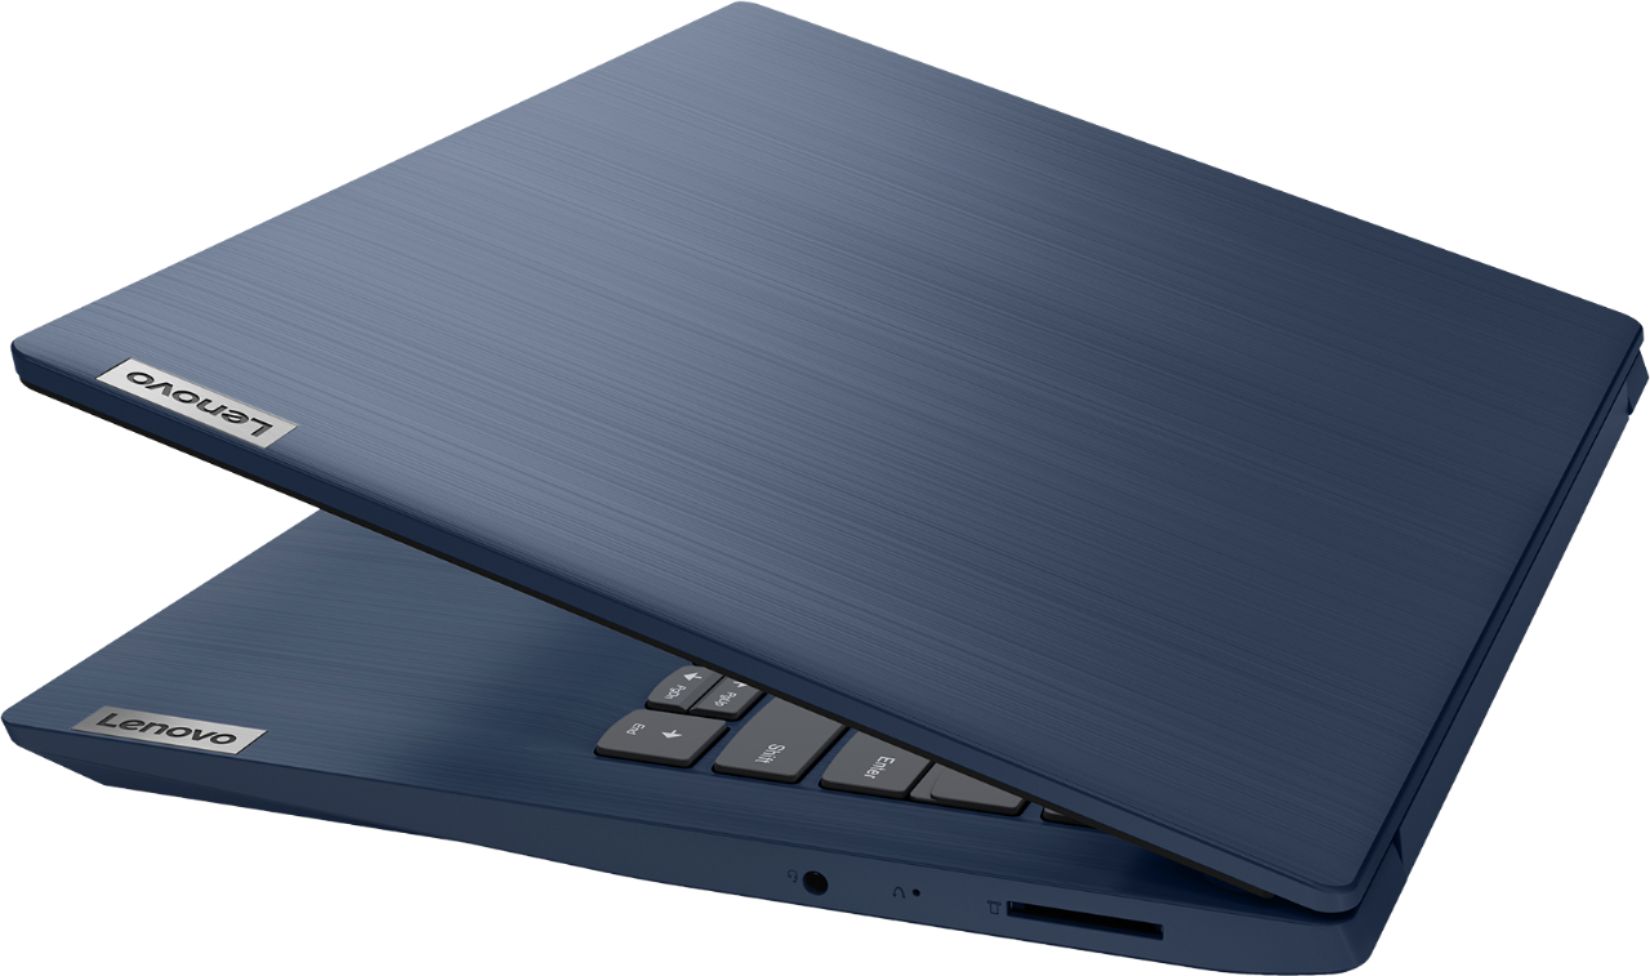 Lenovo Ideapad 3 14 Laptop Amd Ryzen 3 3250u 8gb Memory 1tb Hdd Abyss Blue 81w0009dus Best Buy - how to change roblox background on lenovo